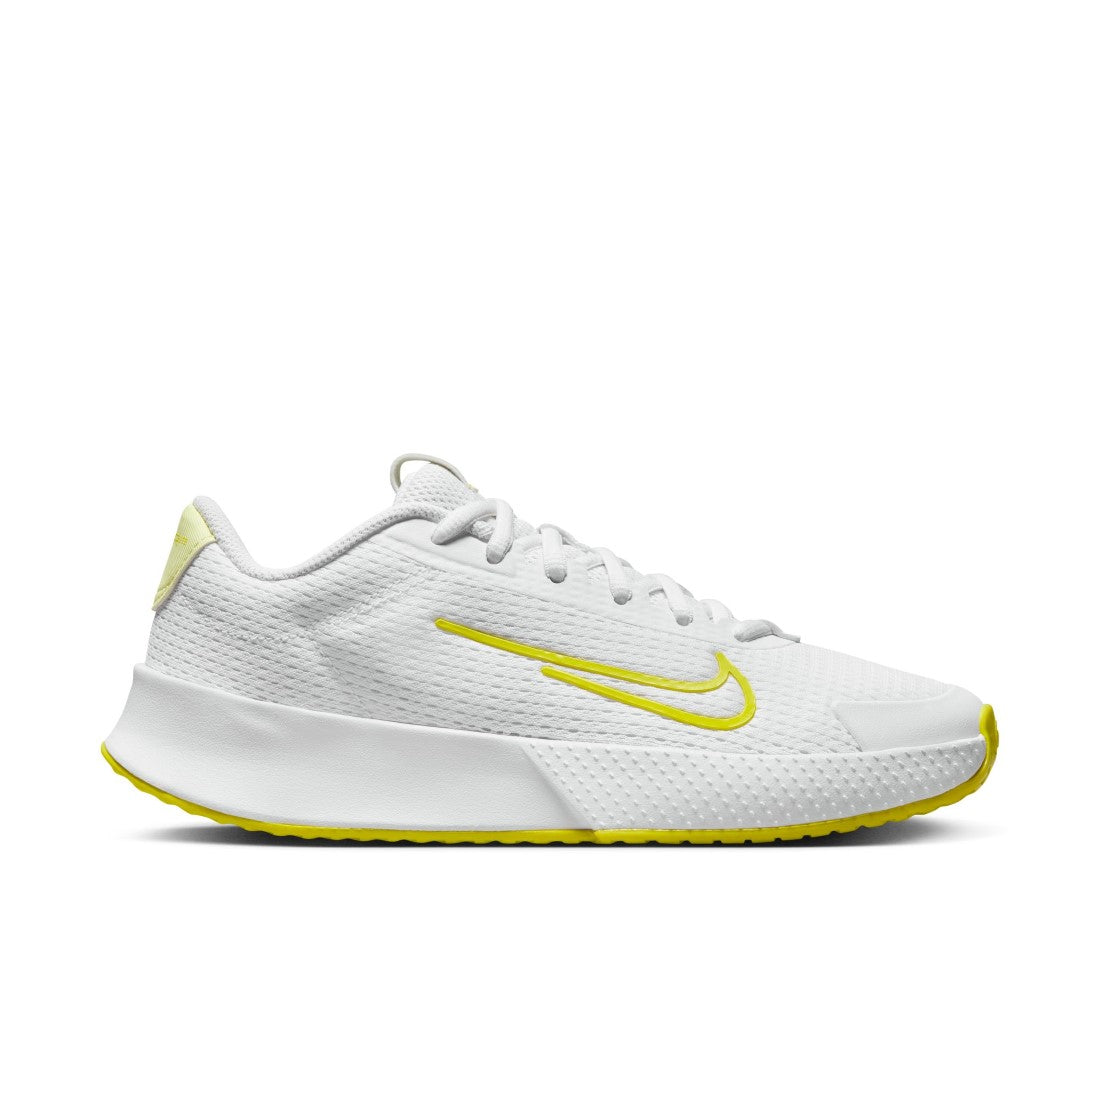 NikeCourt Vapor Lite 2 Tennis Shoes